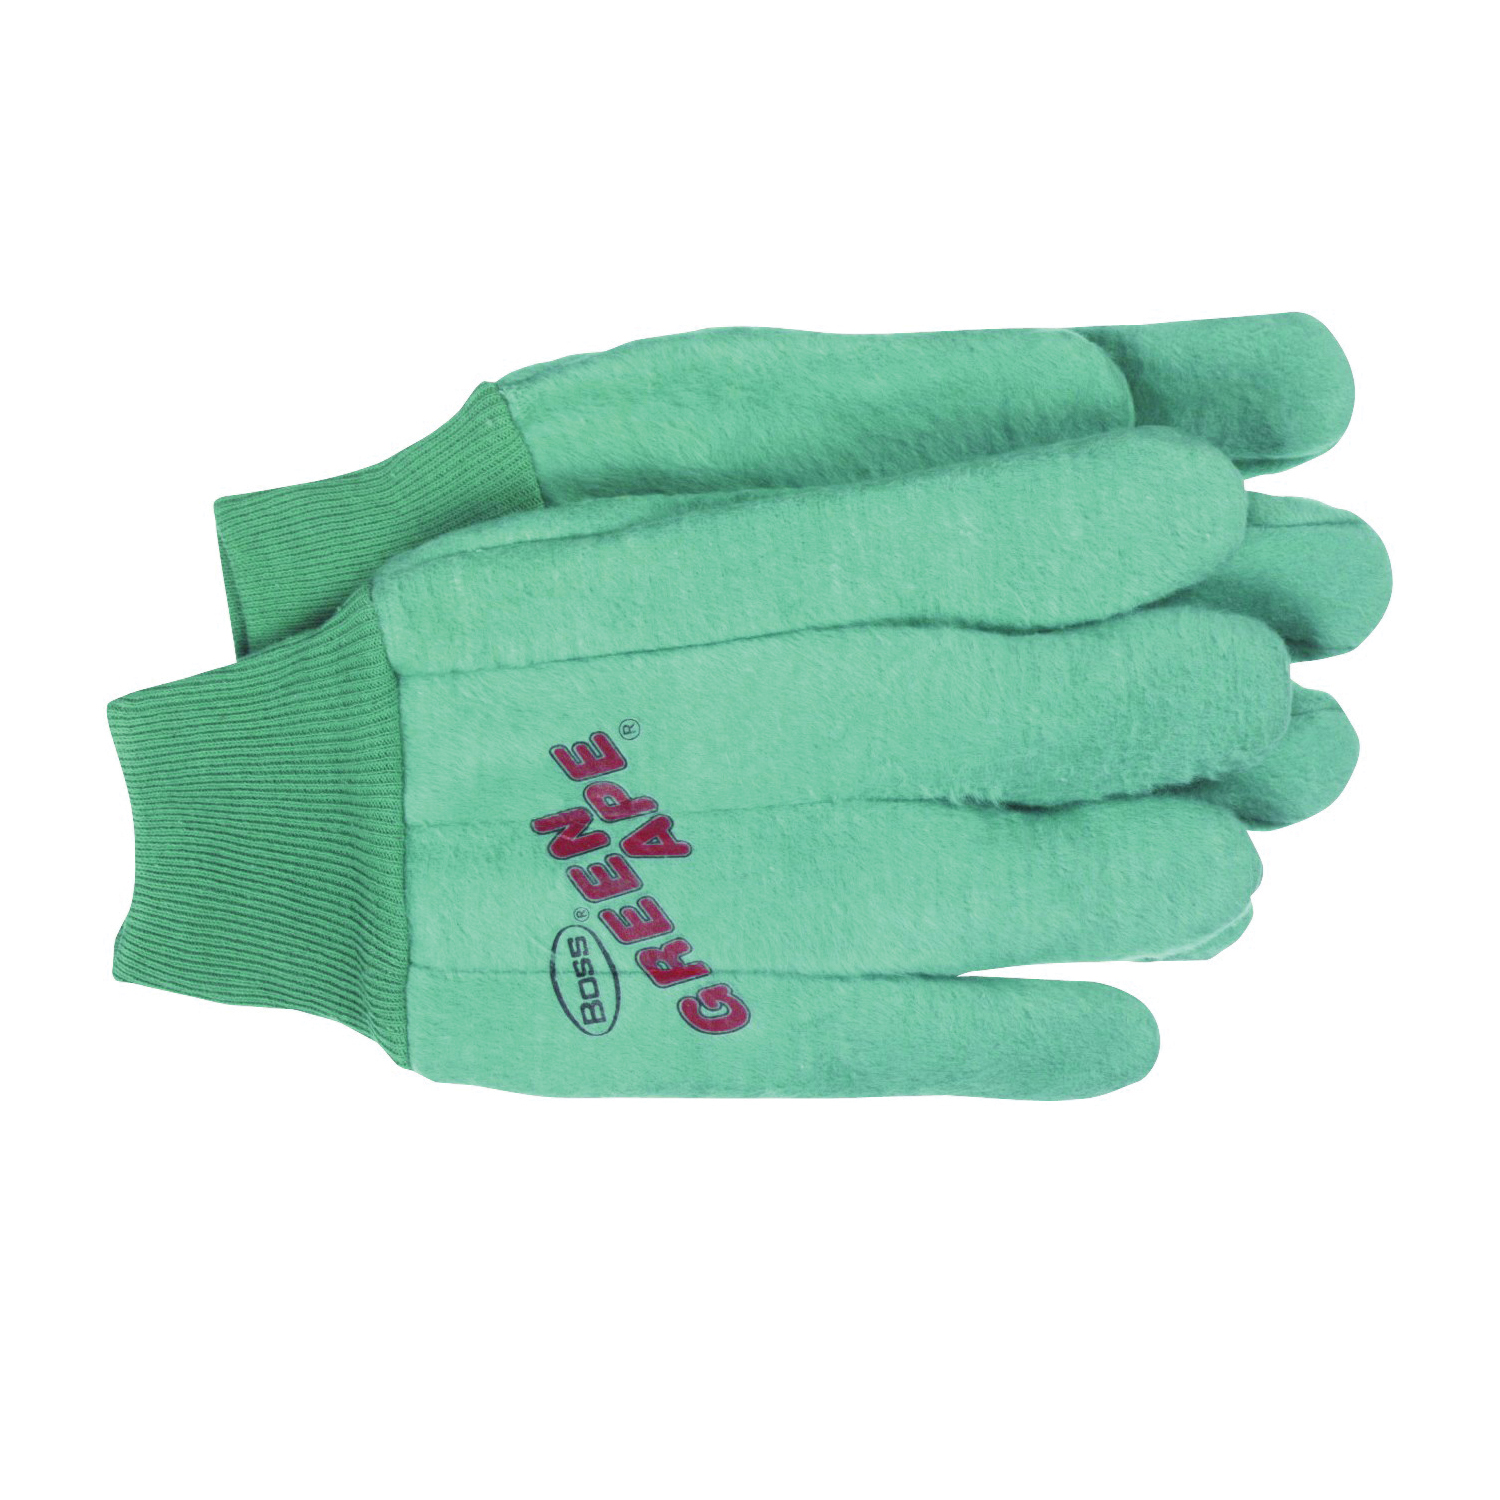 Green Ape 313 Clute-Cut Chore Gloves, L, Straight Thumb, Knit Wrist Cuff, Cotton, Green